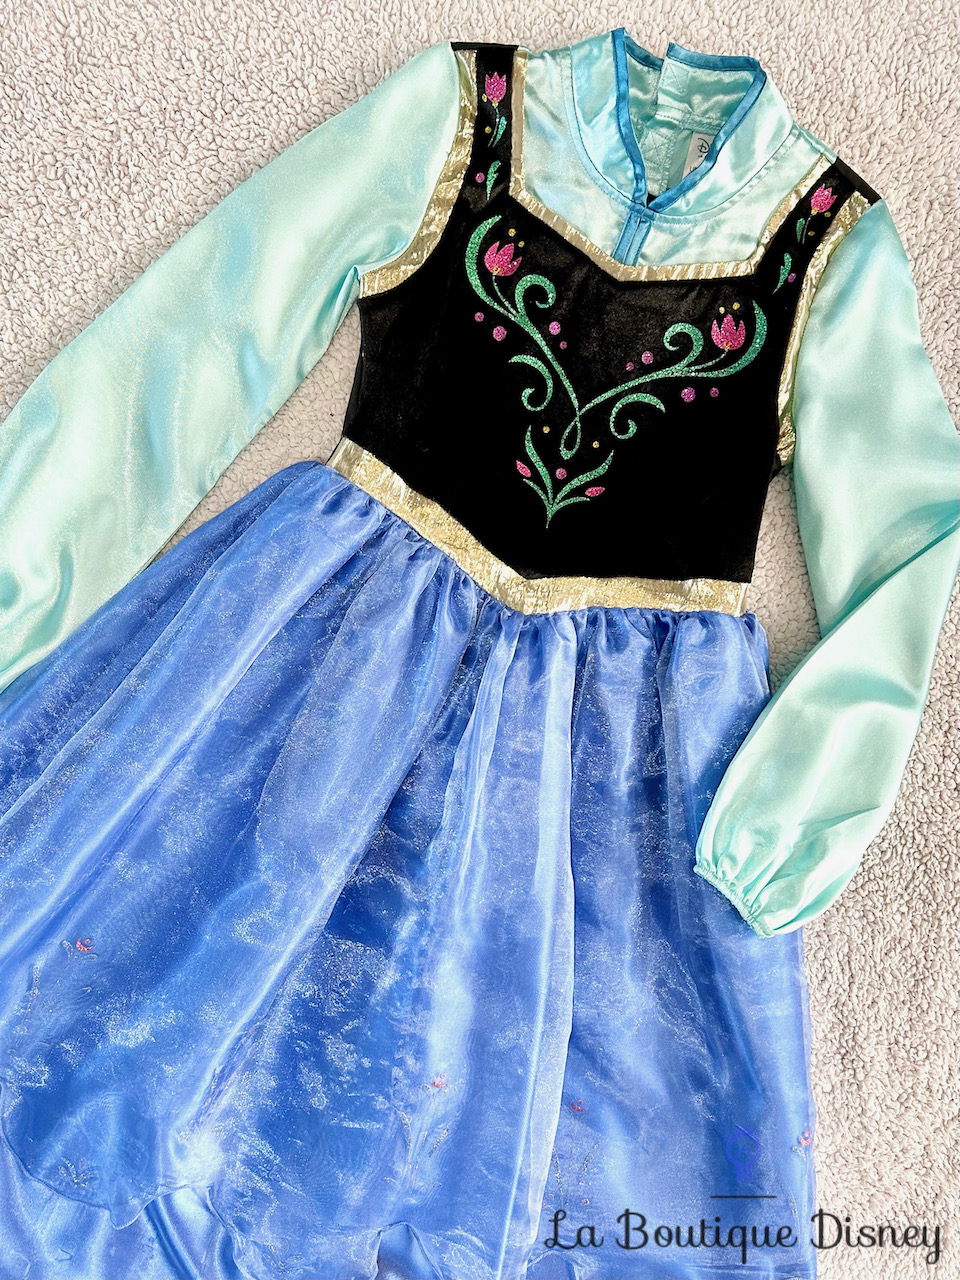 Lot robe reine des neiges 7/8 ans - Disney - 7 ans